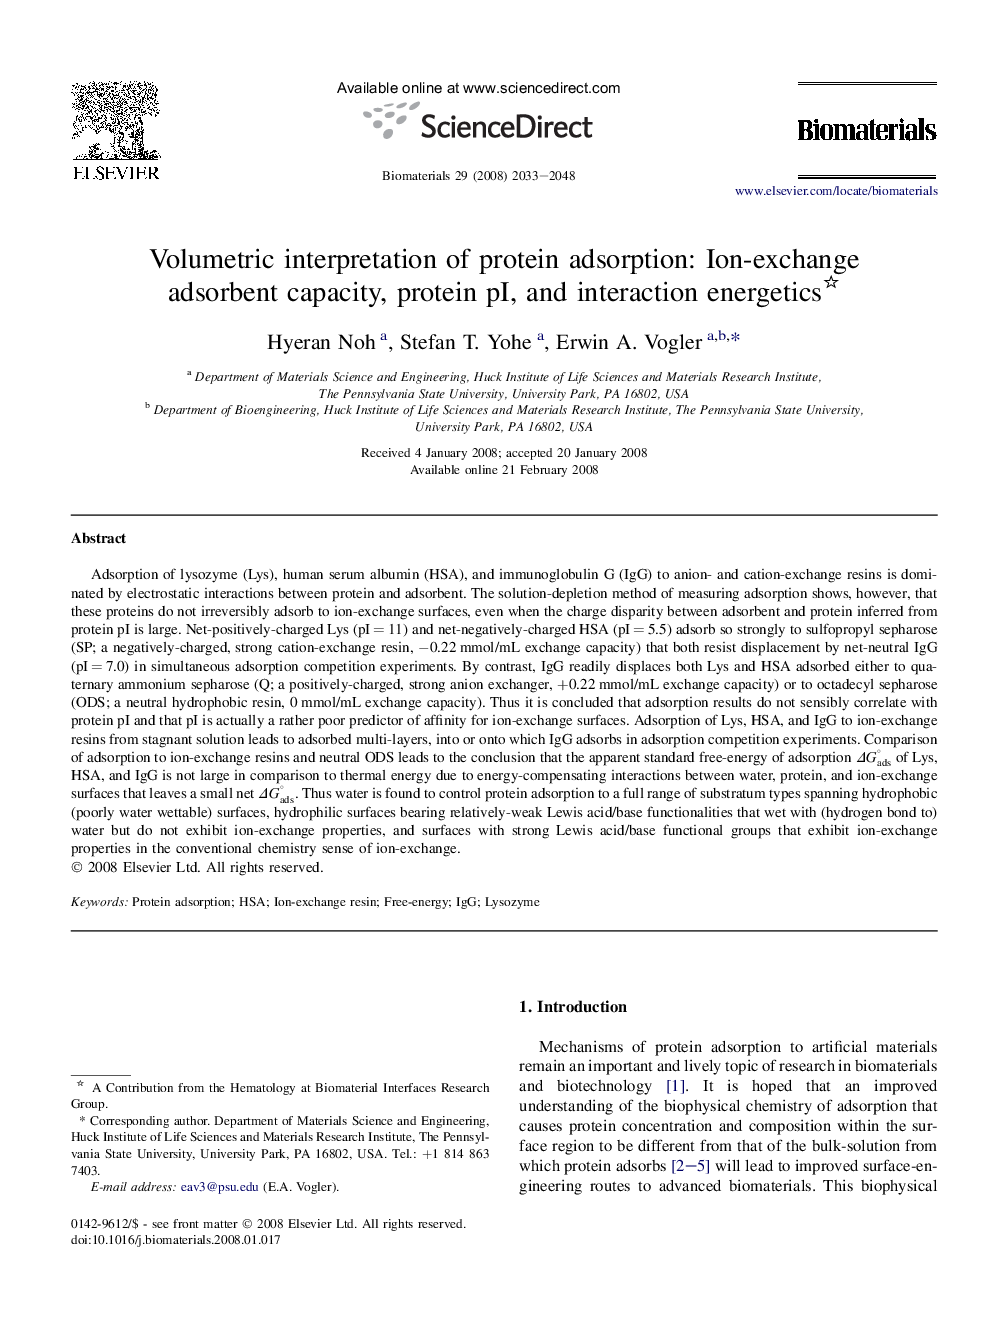 Volumetric interpretation of protein adsorption: Ion-exchange adsorbent capacity, protein pI, and interaction energetics 